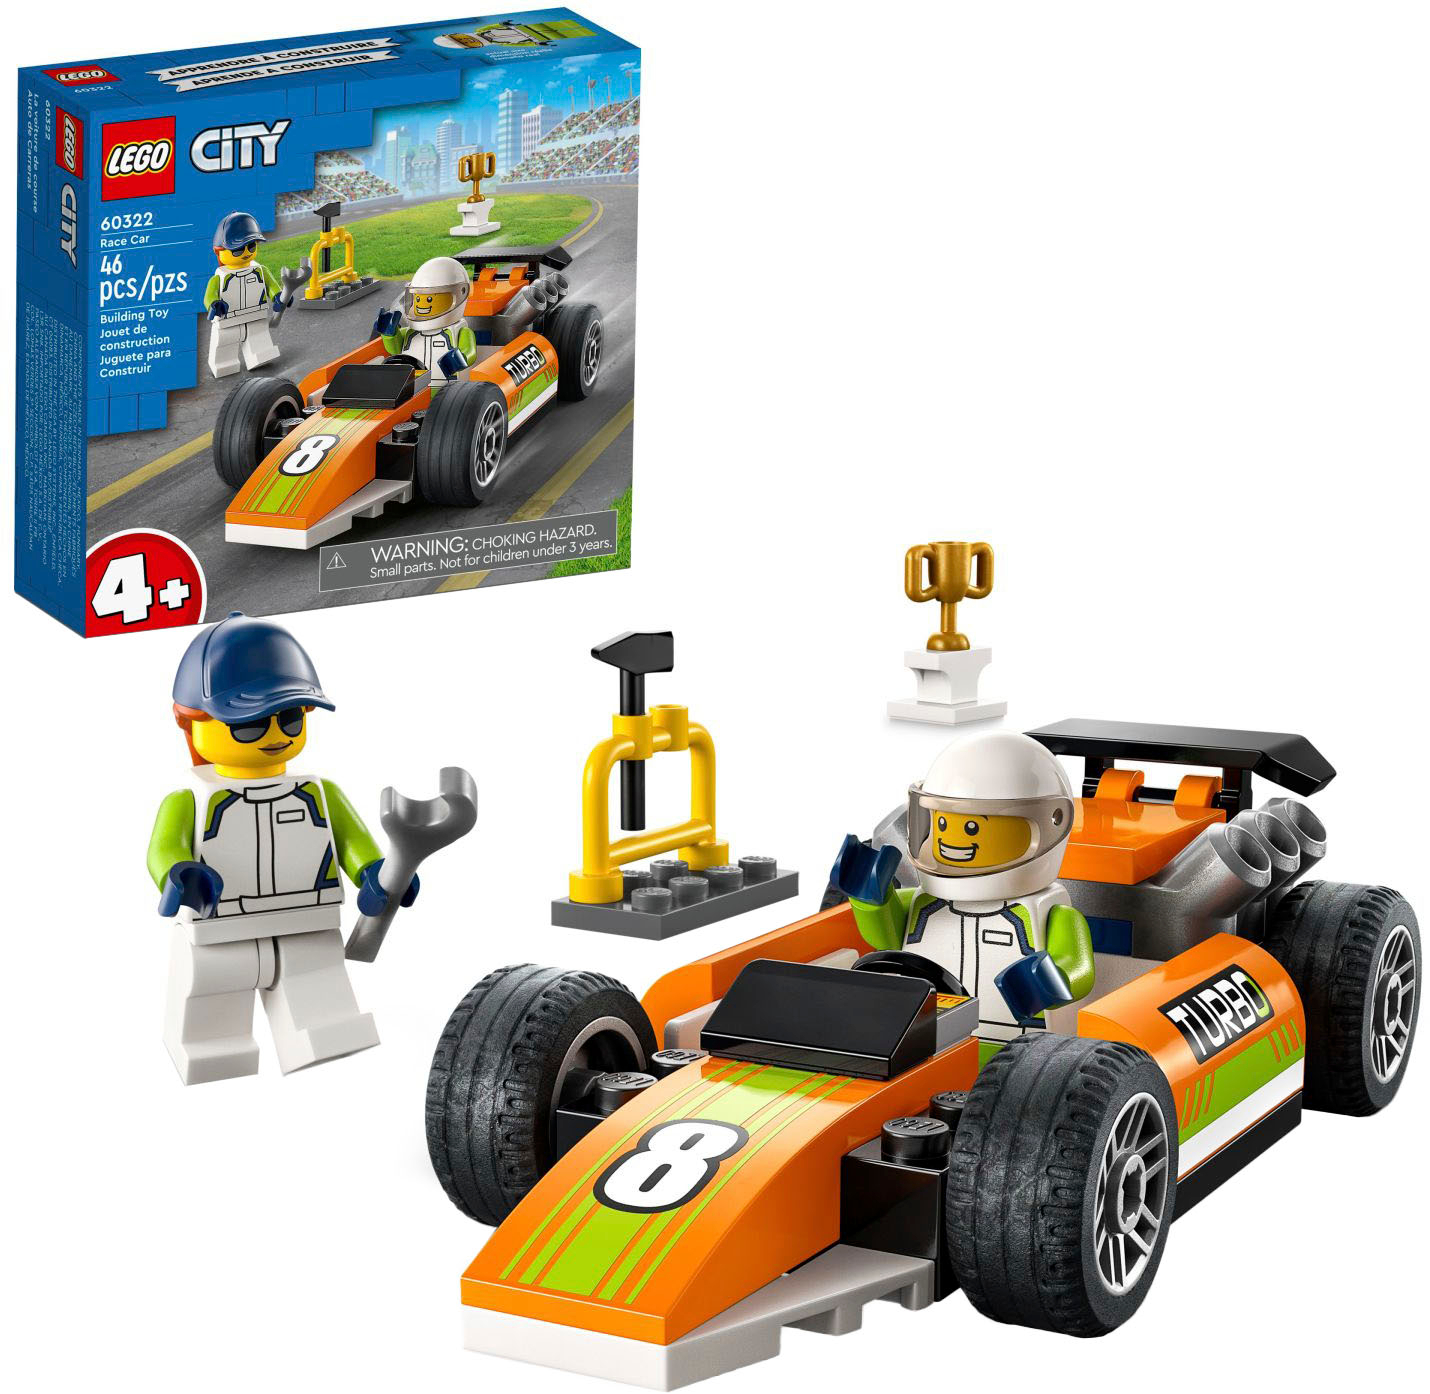 City Vehicles Race Car 60322 6371127 - Buy